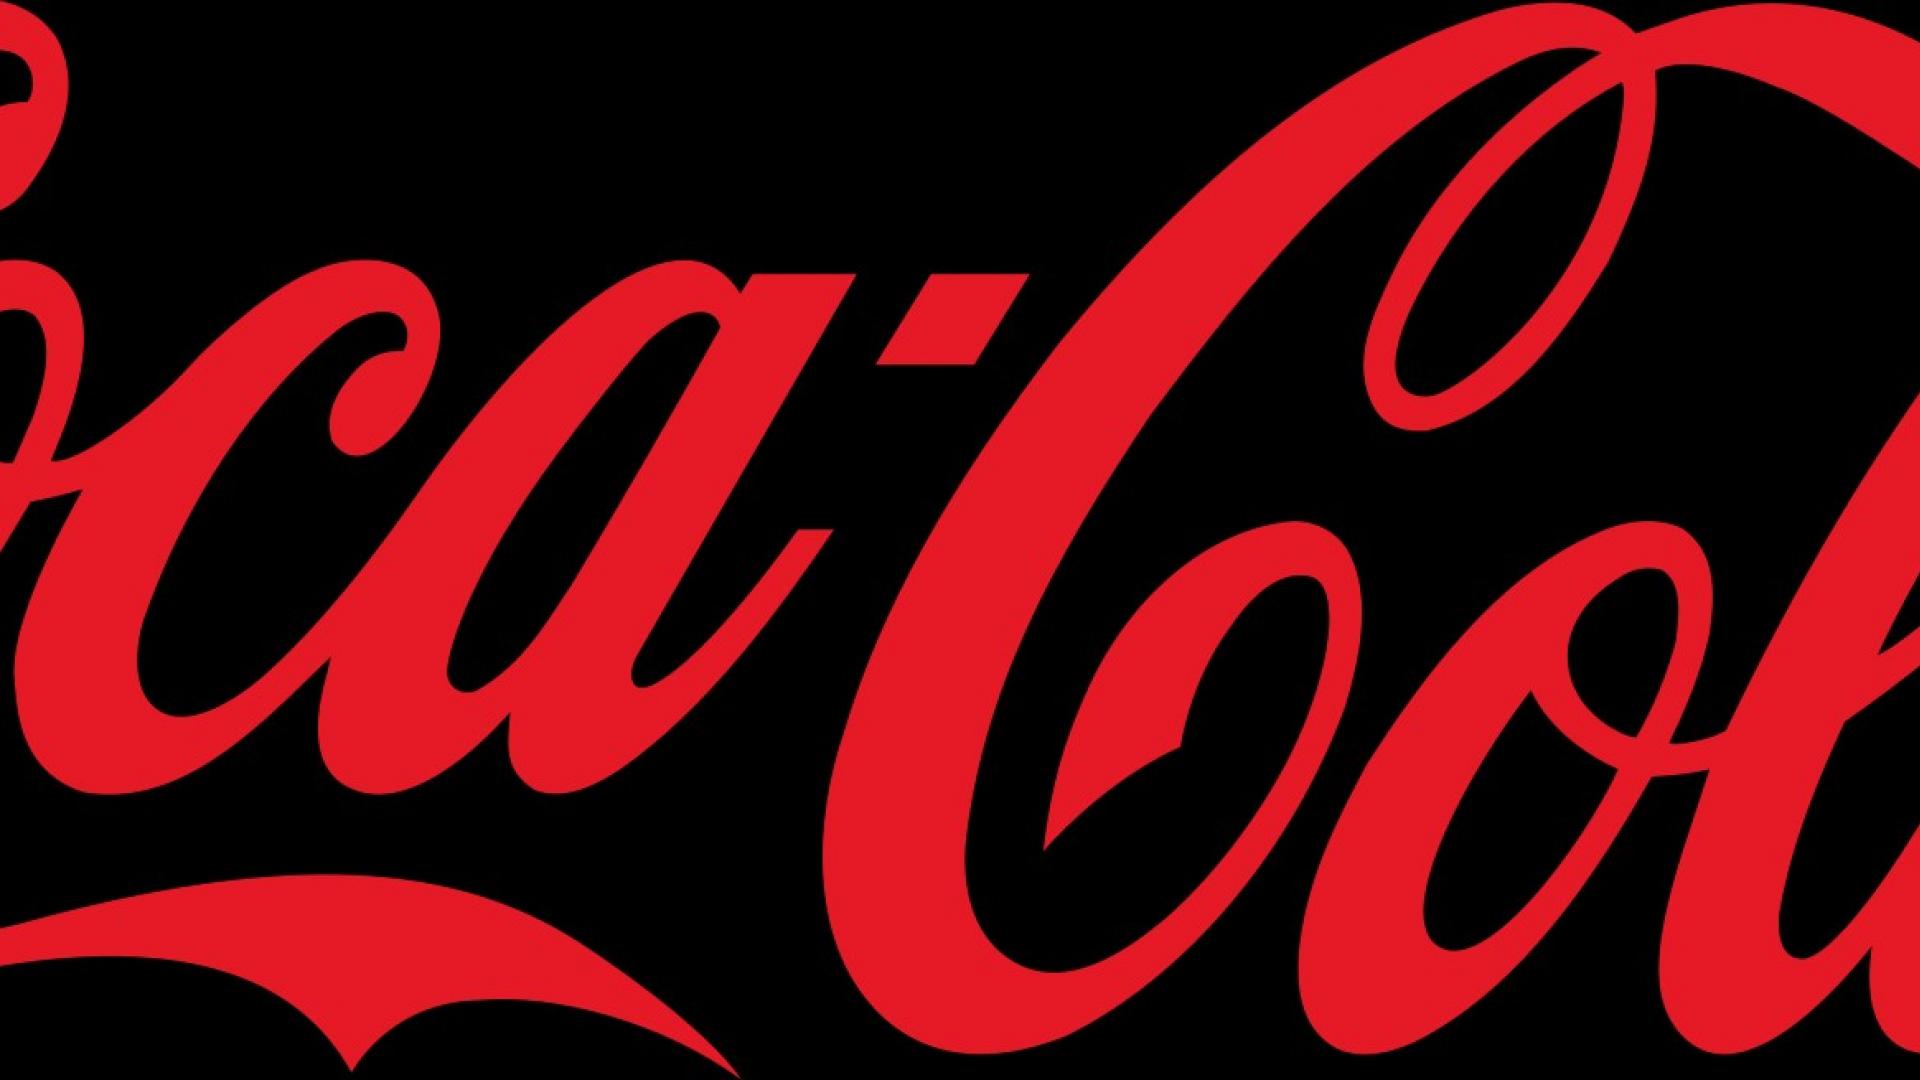 Coca Cola Logos Wallpaper